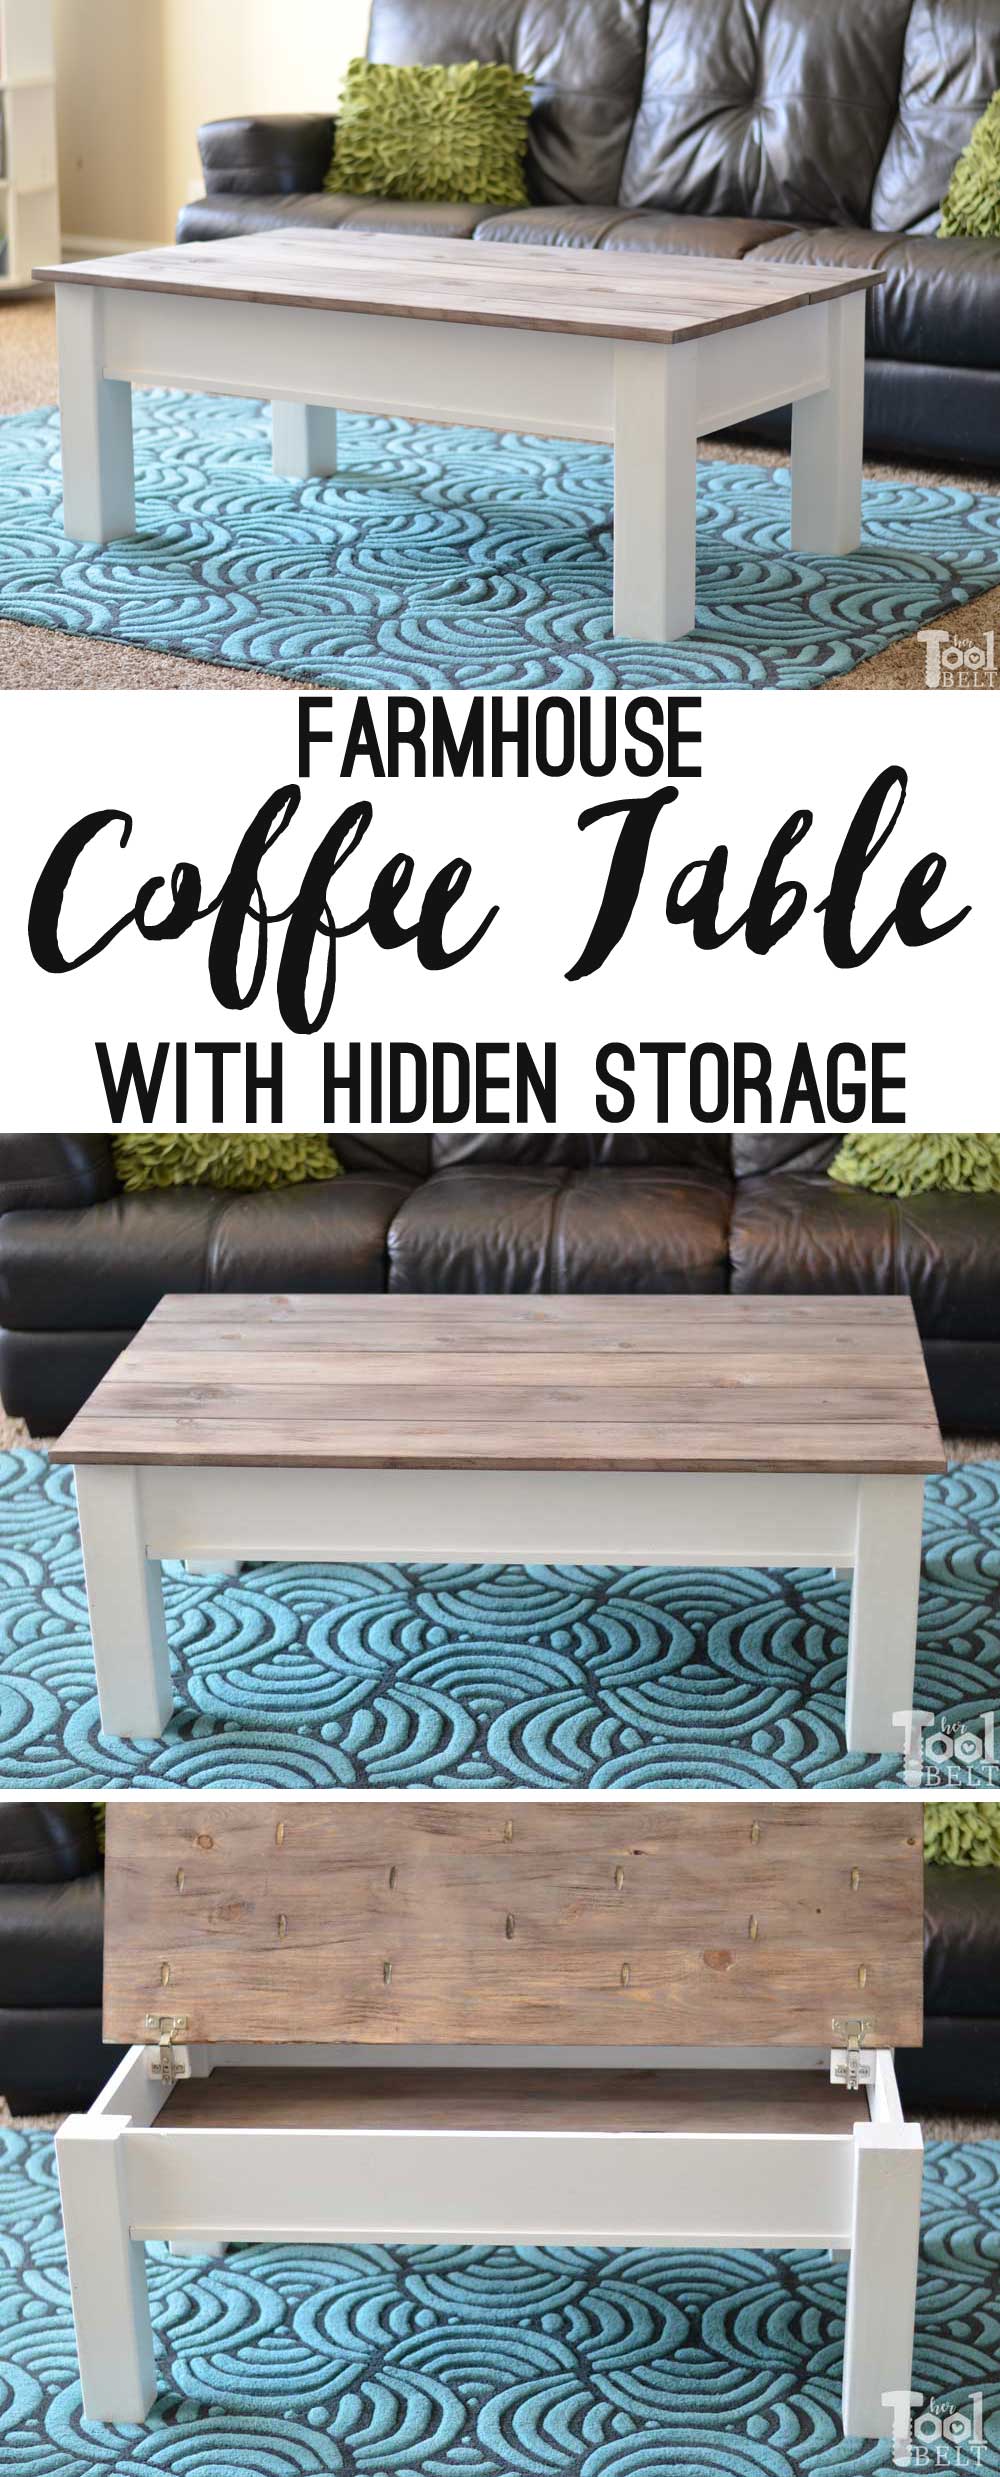 https://www.hertoolbelt.com/wp-content/uploads/2017/10/farmhouse-coffee-table-with-hidden-storage.jpg